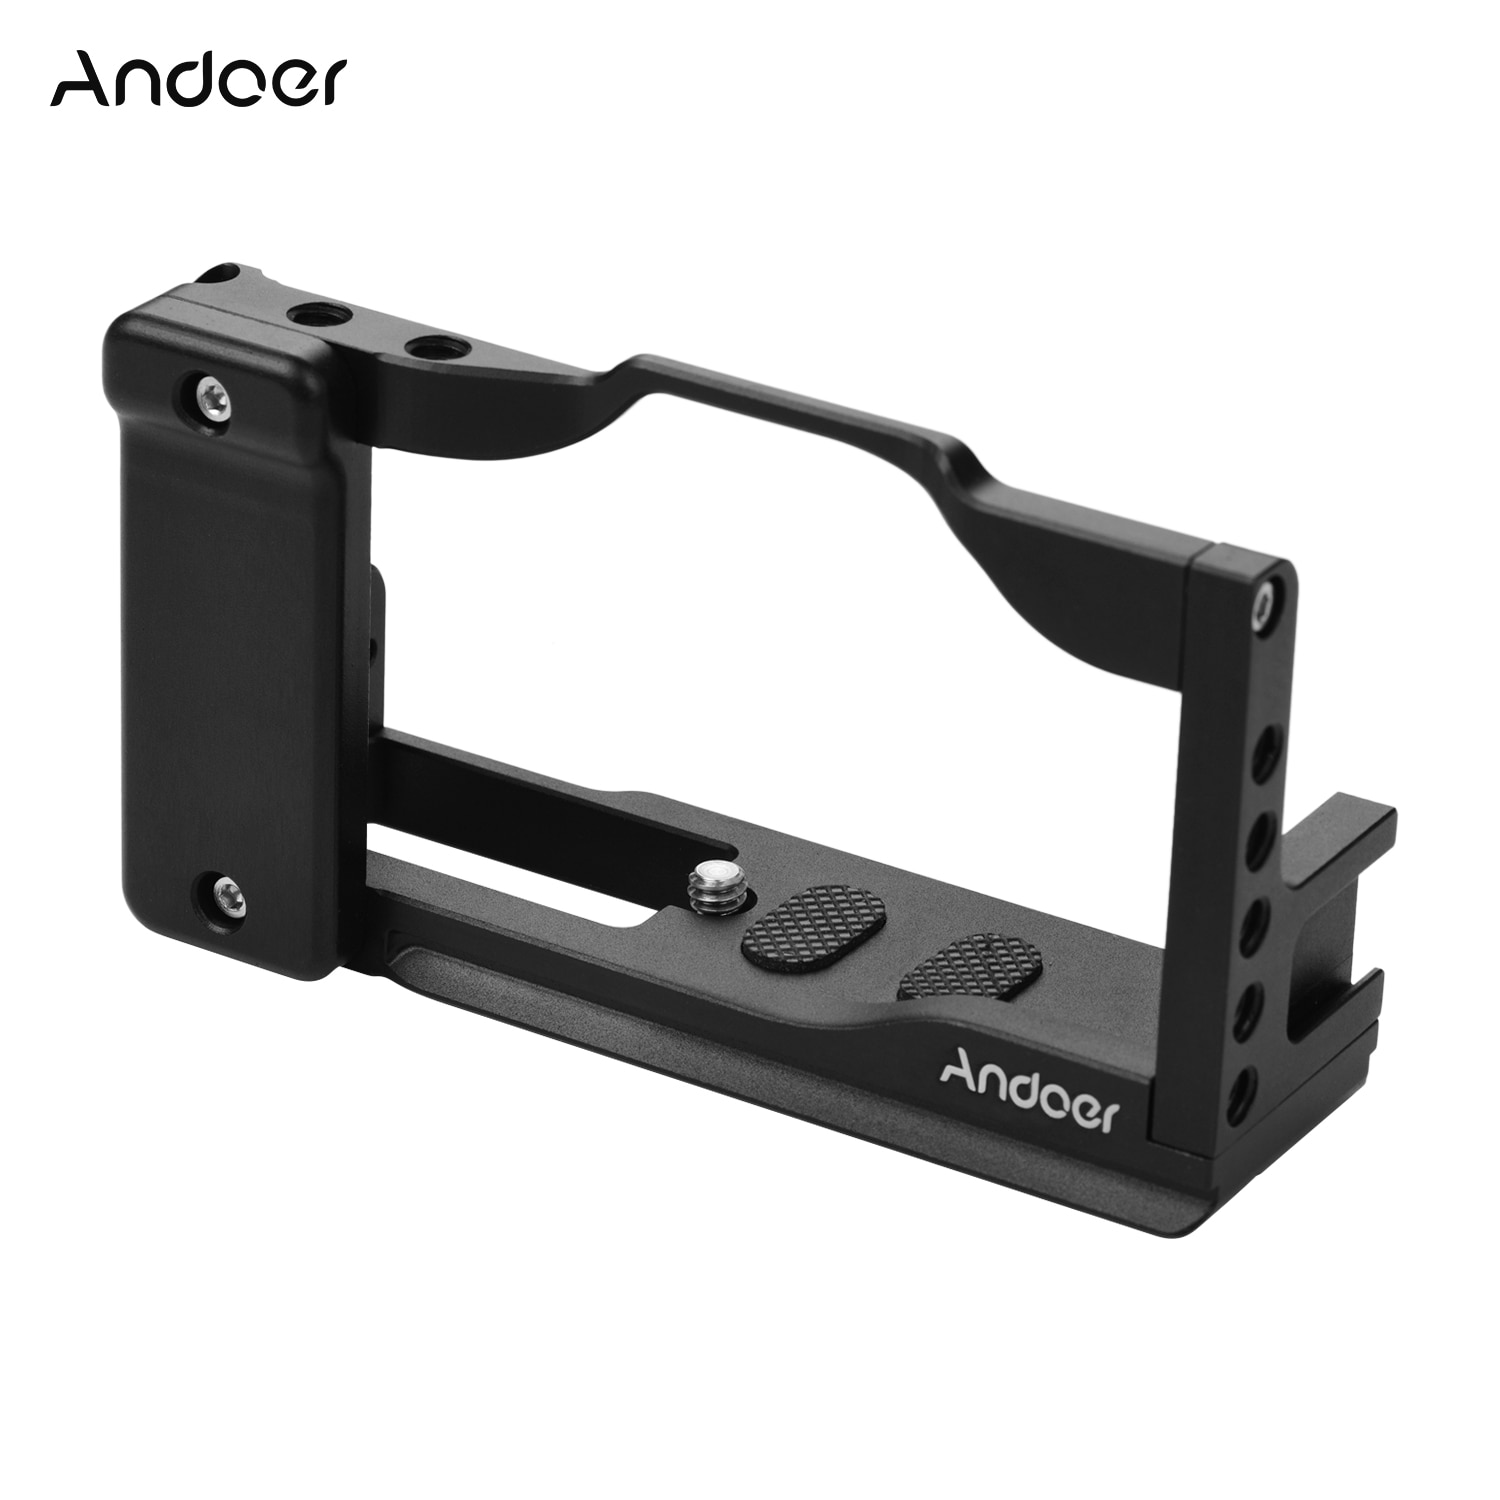 Andoer Video Accessoires Camera Kooi Kit Aluminium Camera Case Beugel Met Gaten Koud Schoen Voor Canon G7X Mark Iii camera 'S